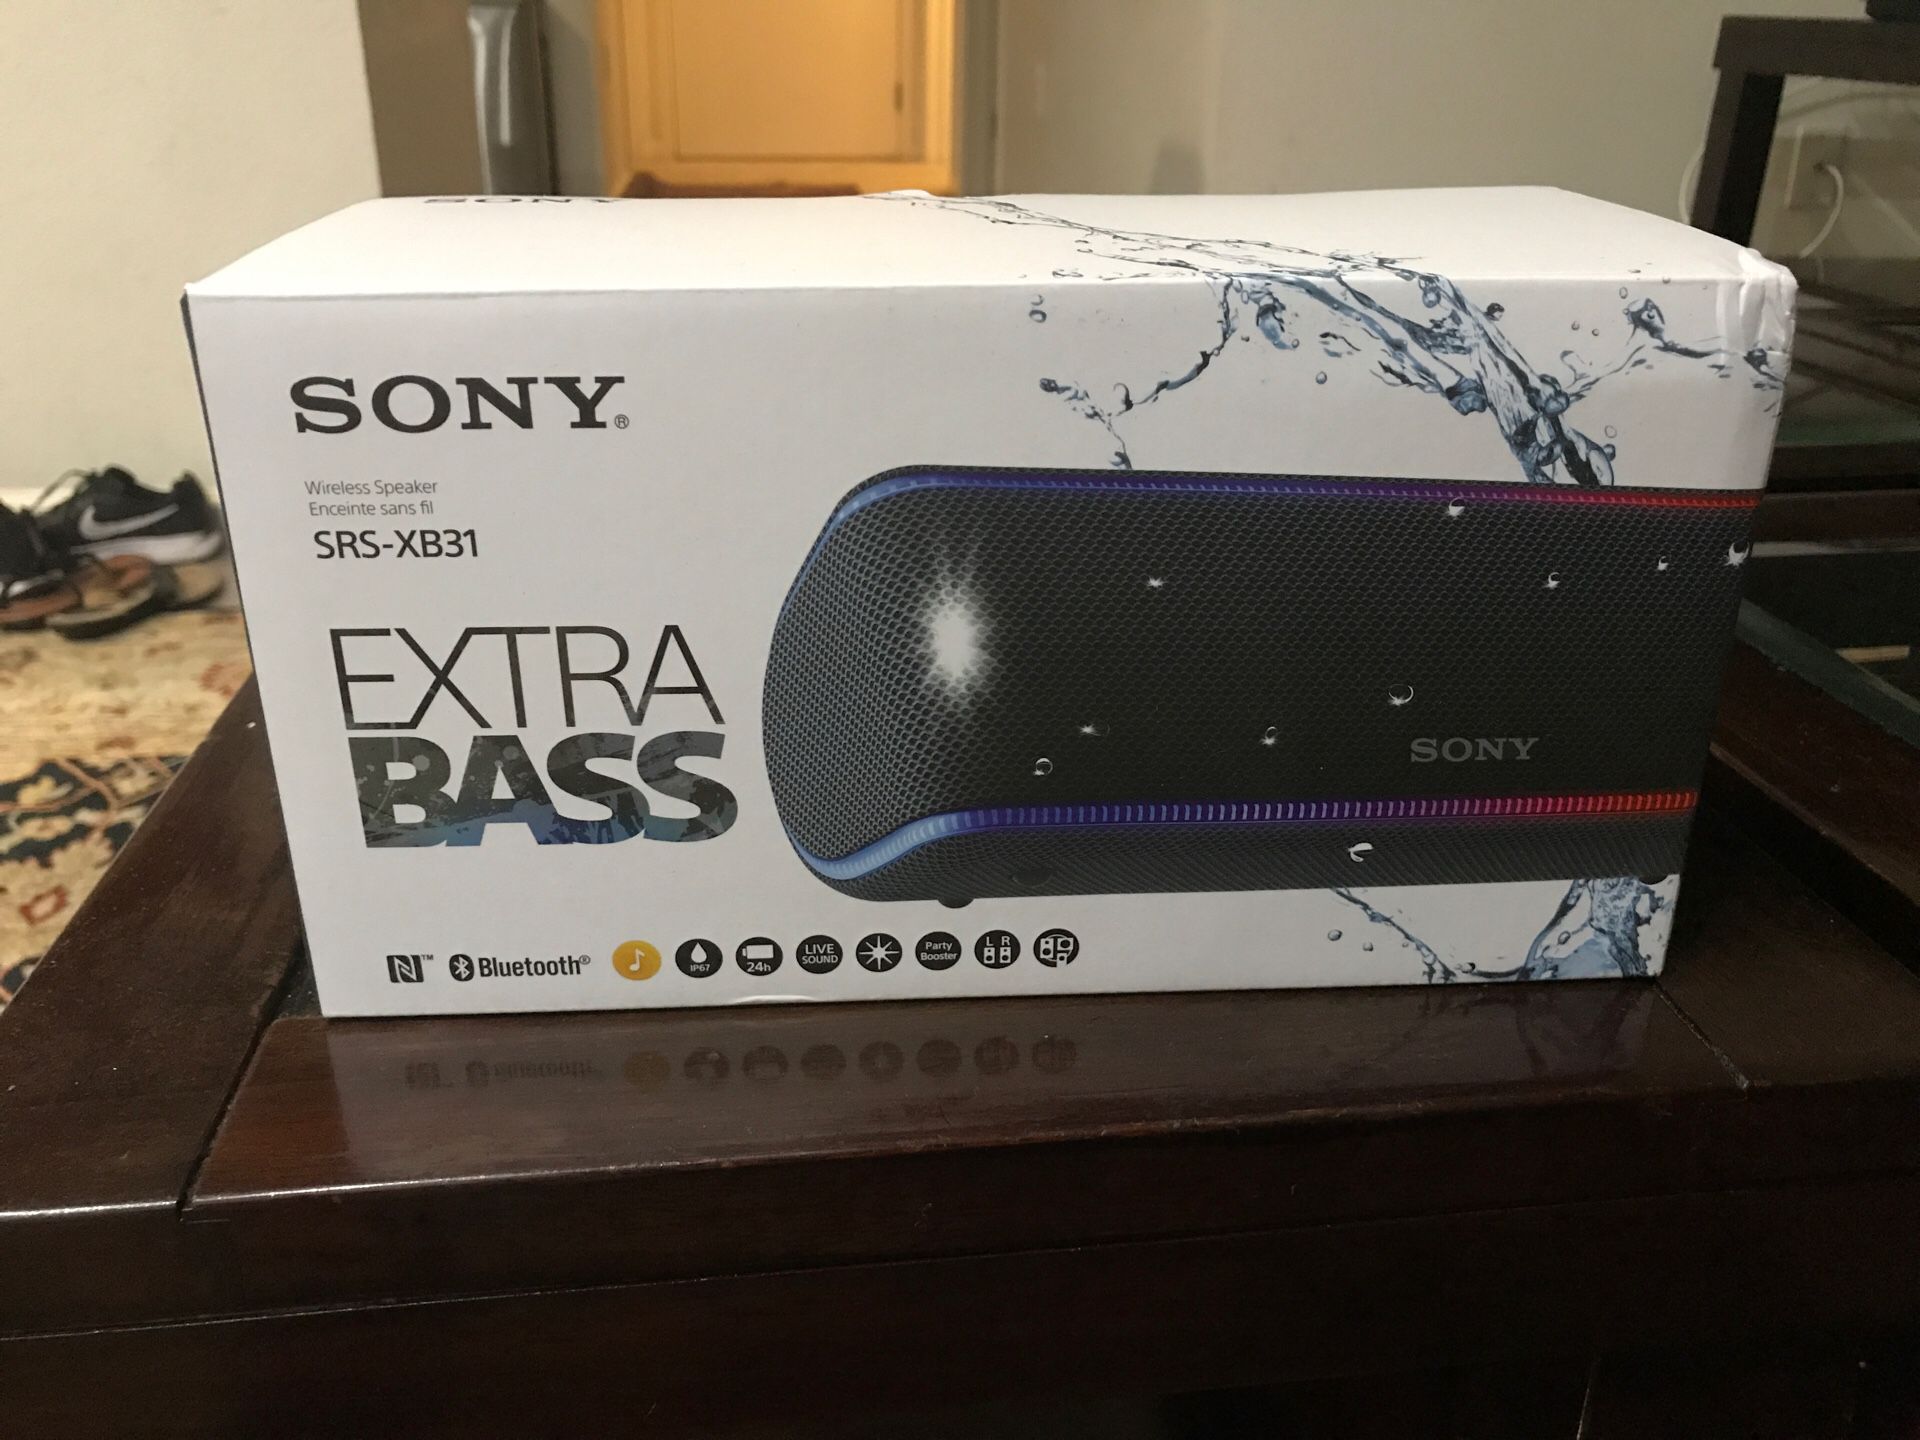 Sony SRS-XB31 speaker